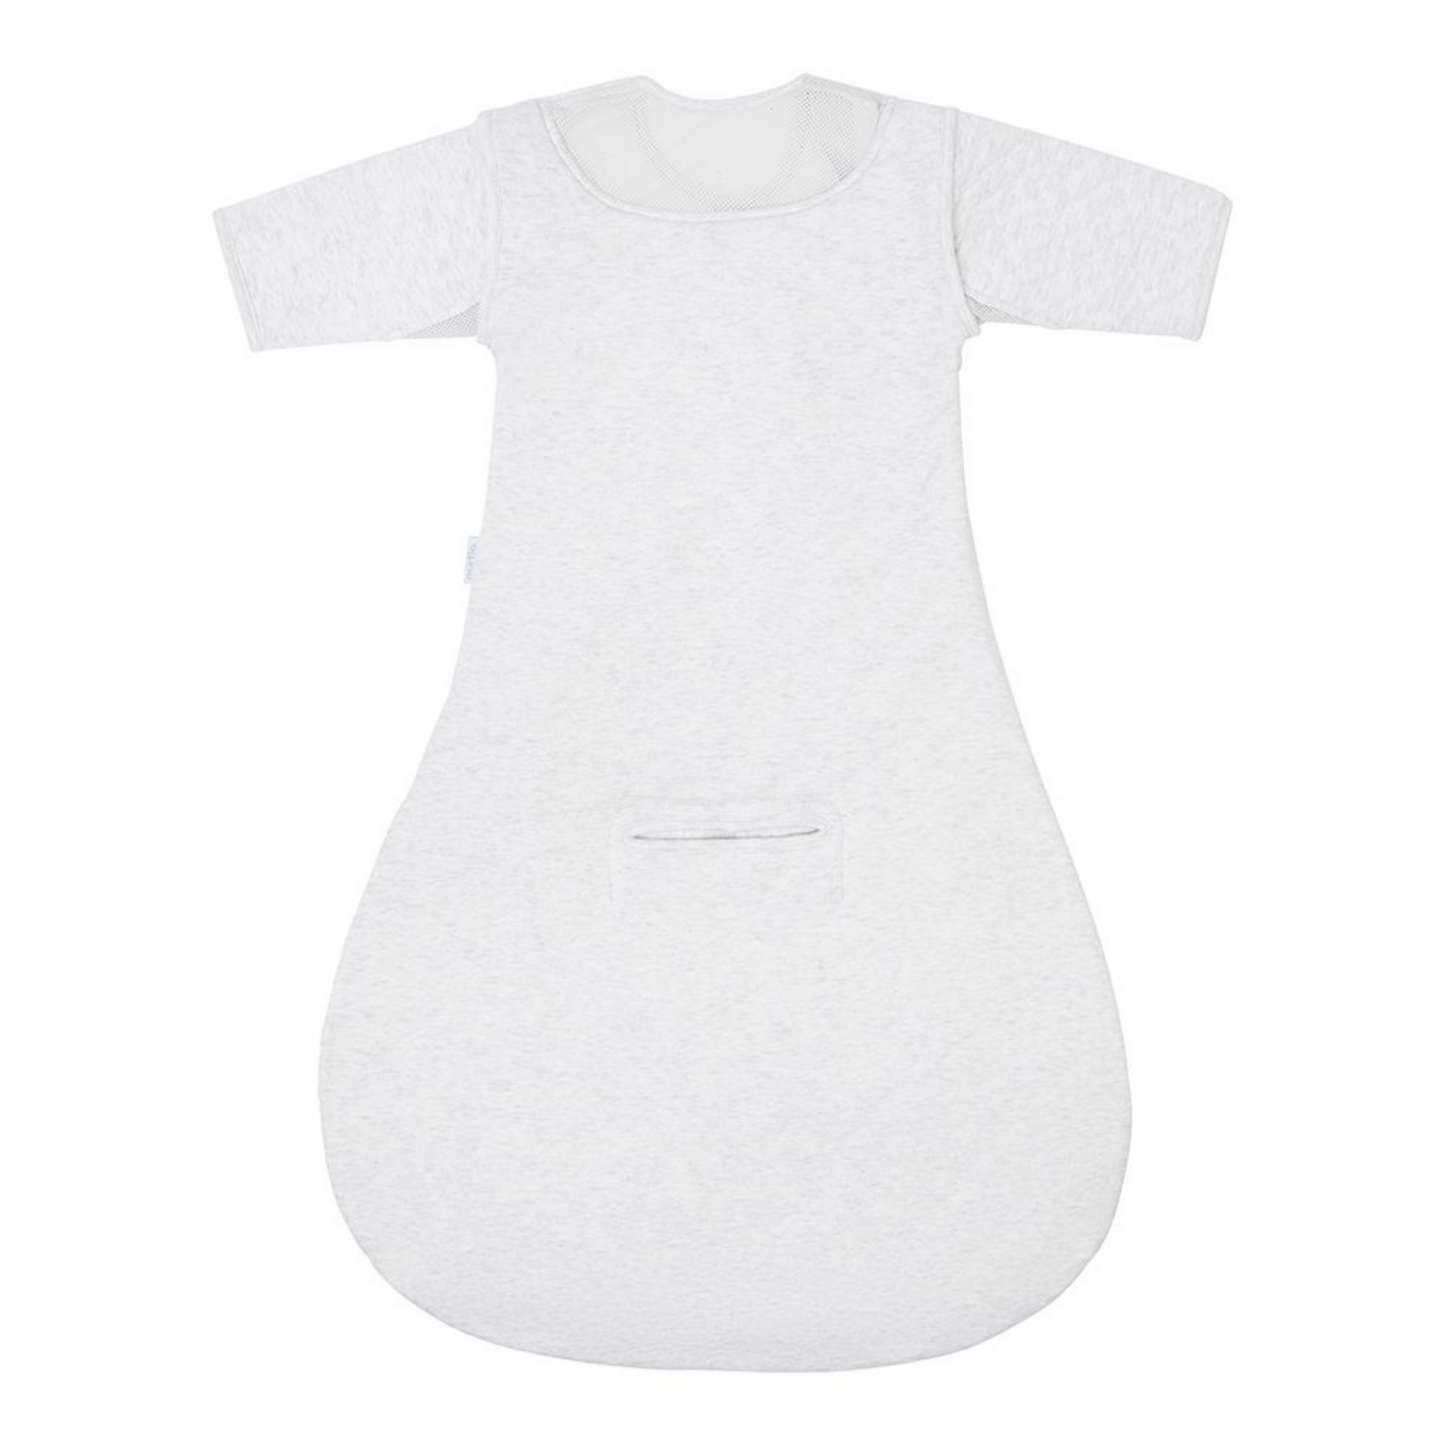 Purflo Baby Sleep Bag 2.5 Tog (All Seasons) - Minimal Grey (3-9 months)